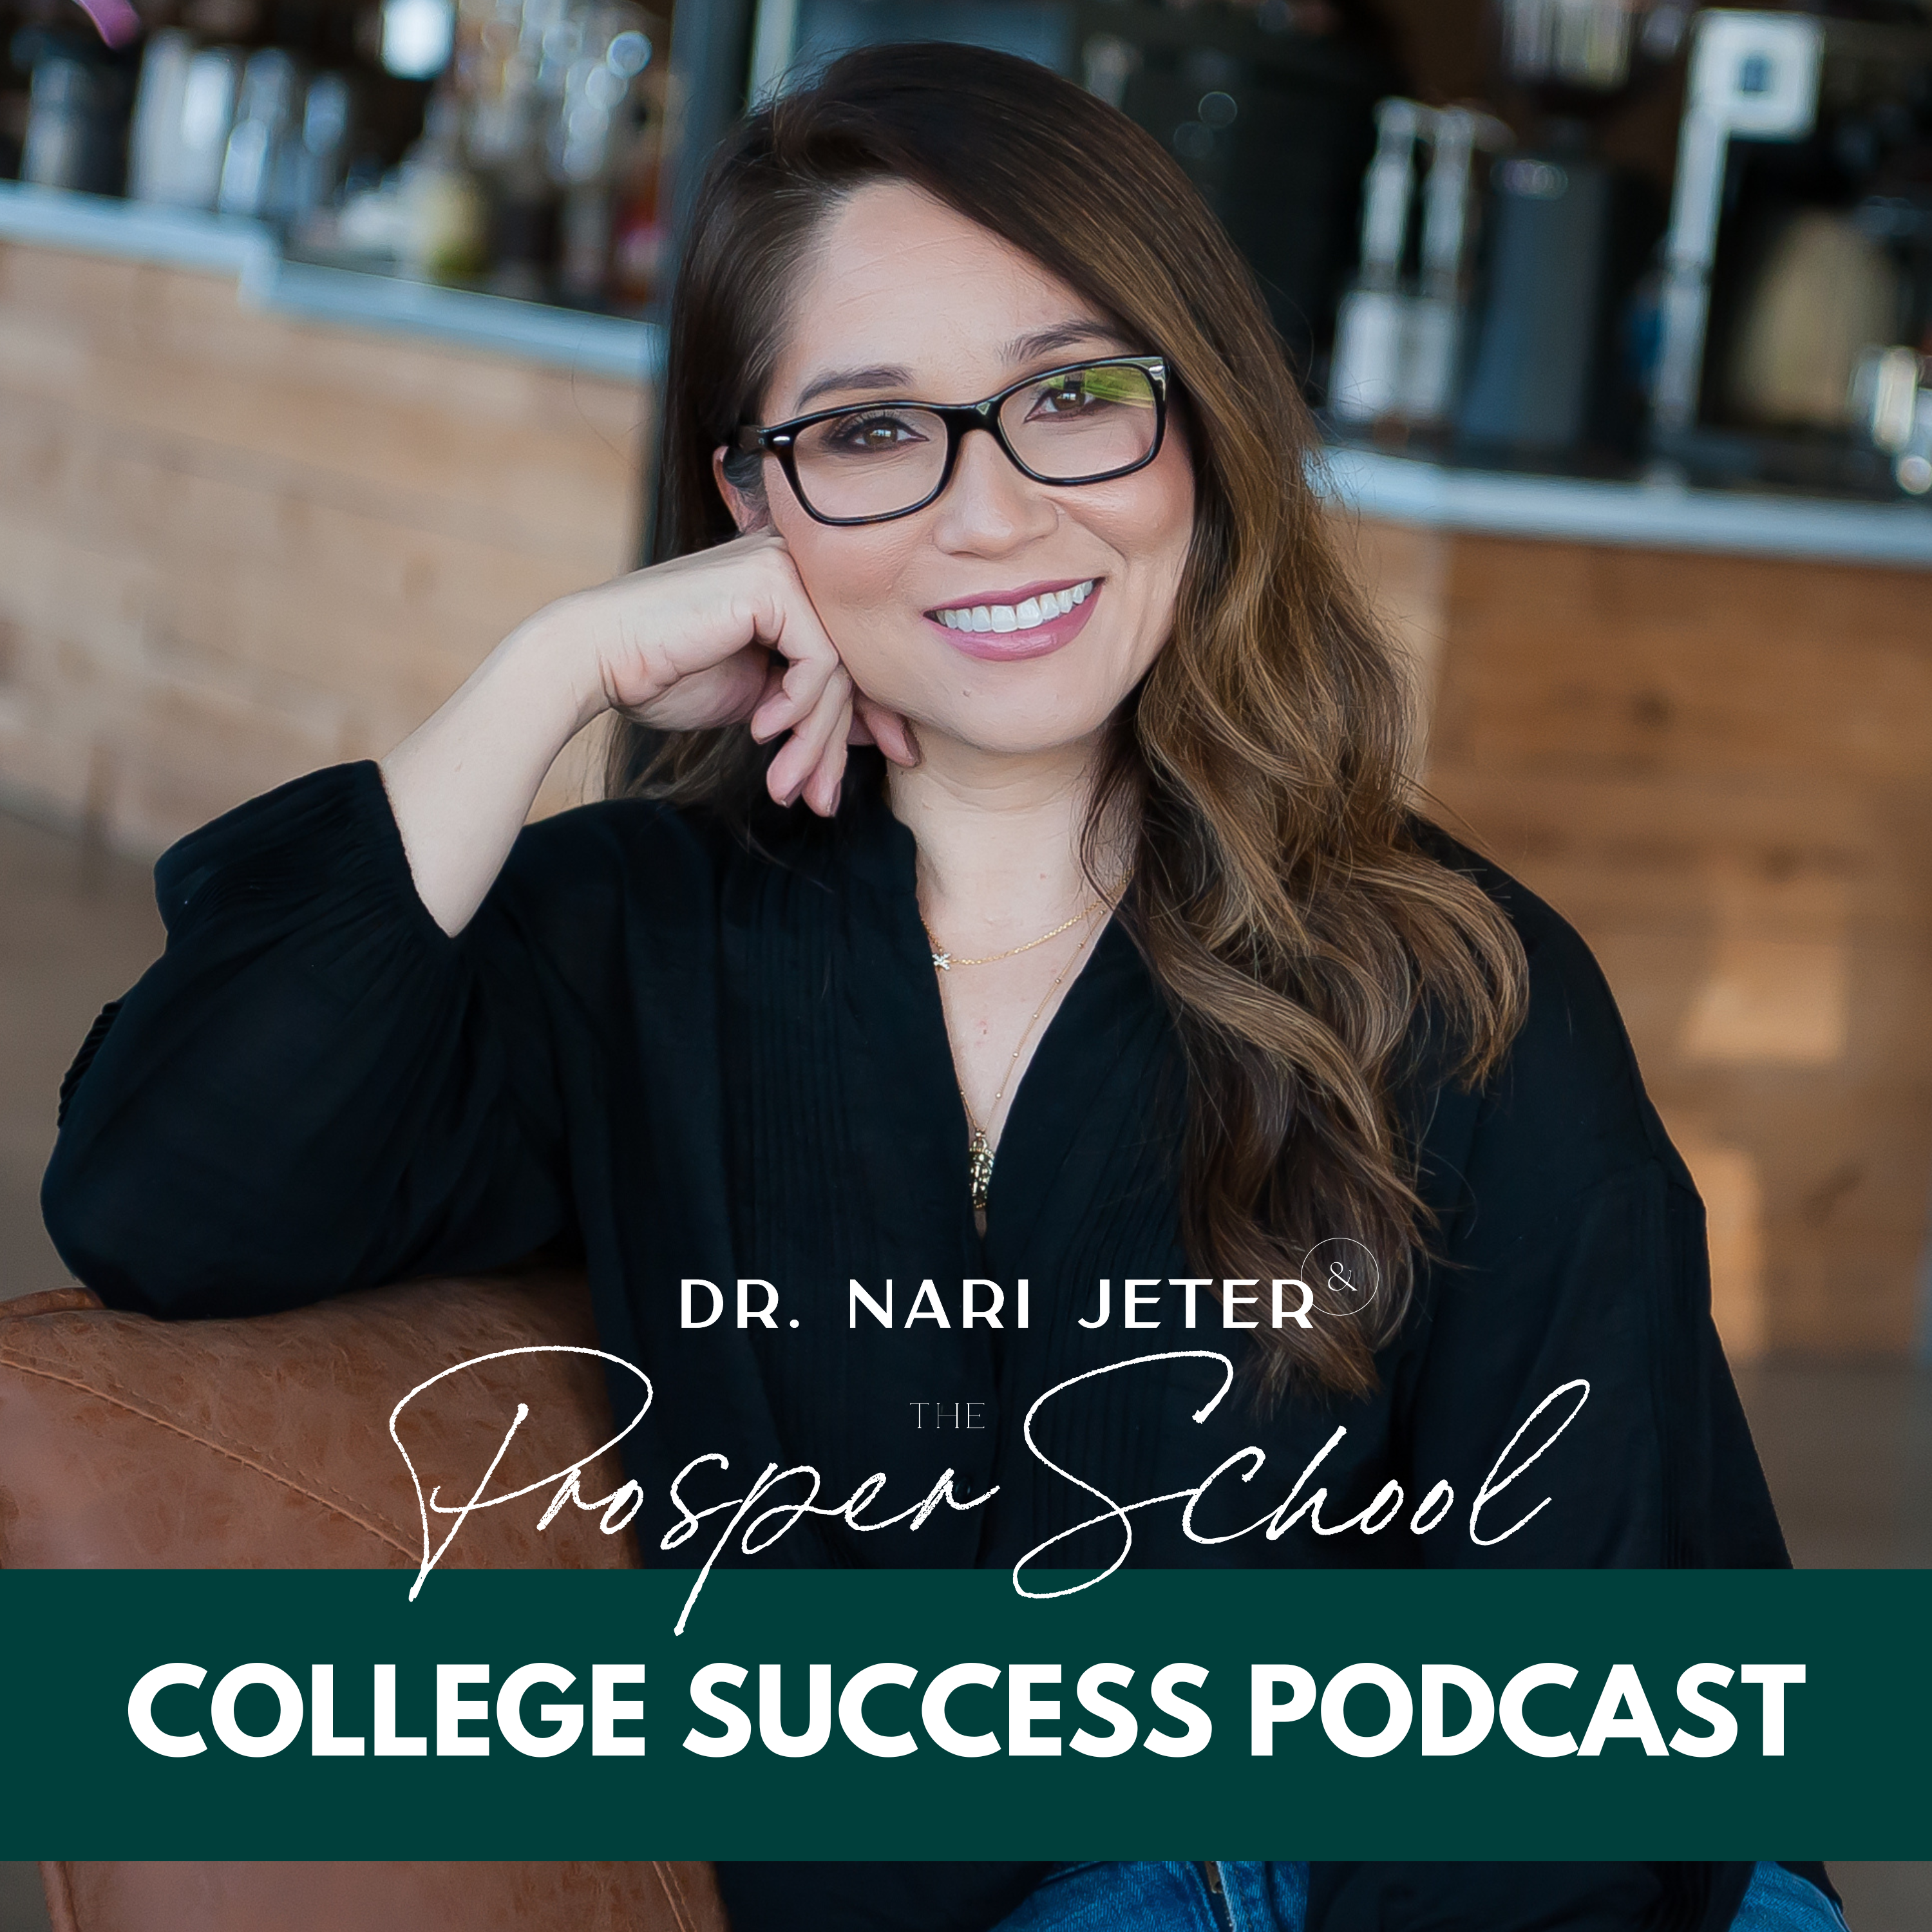 College Success Podcast